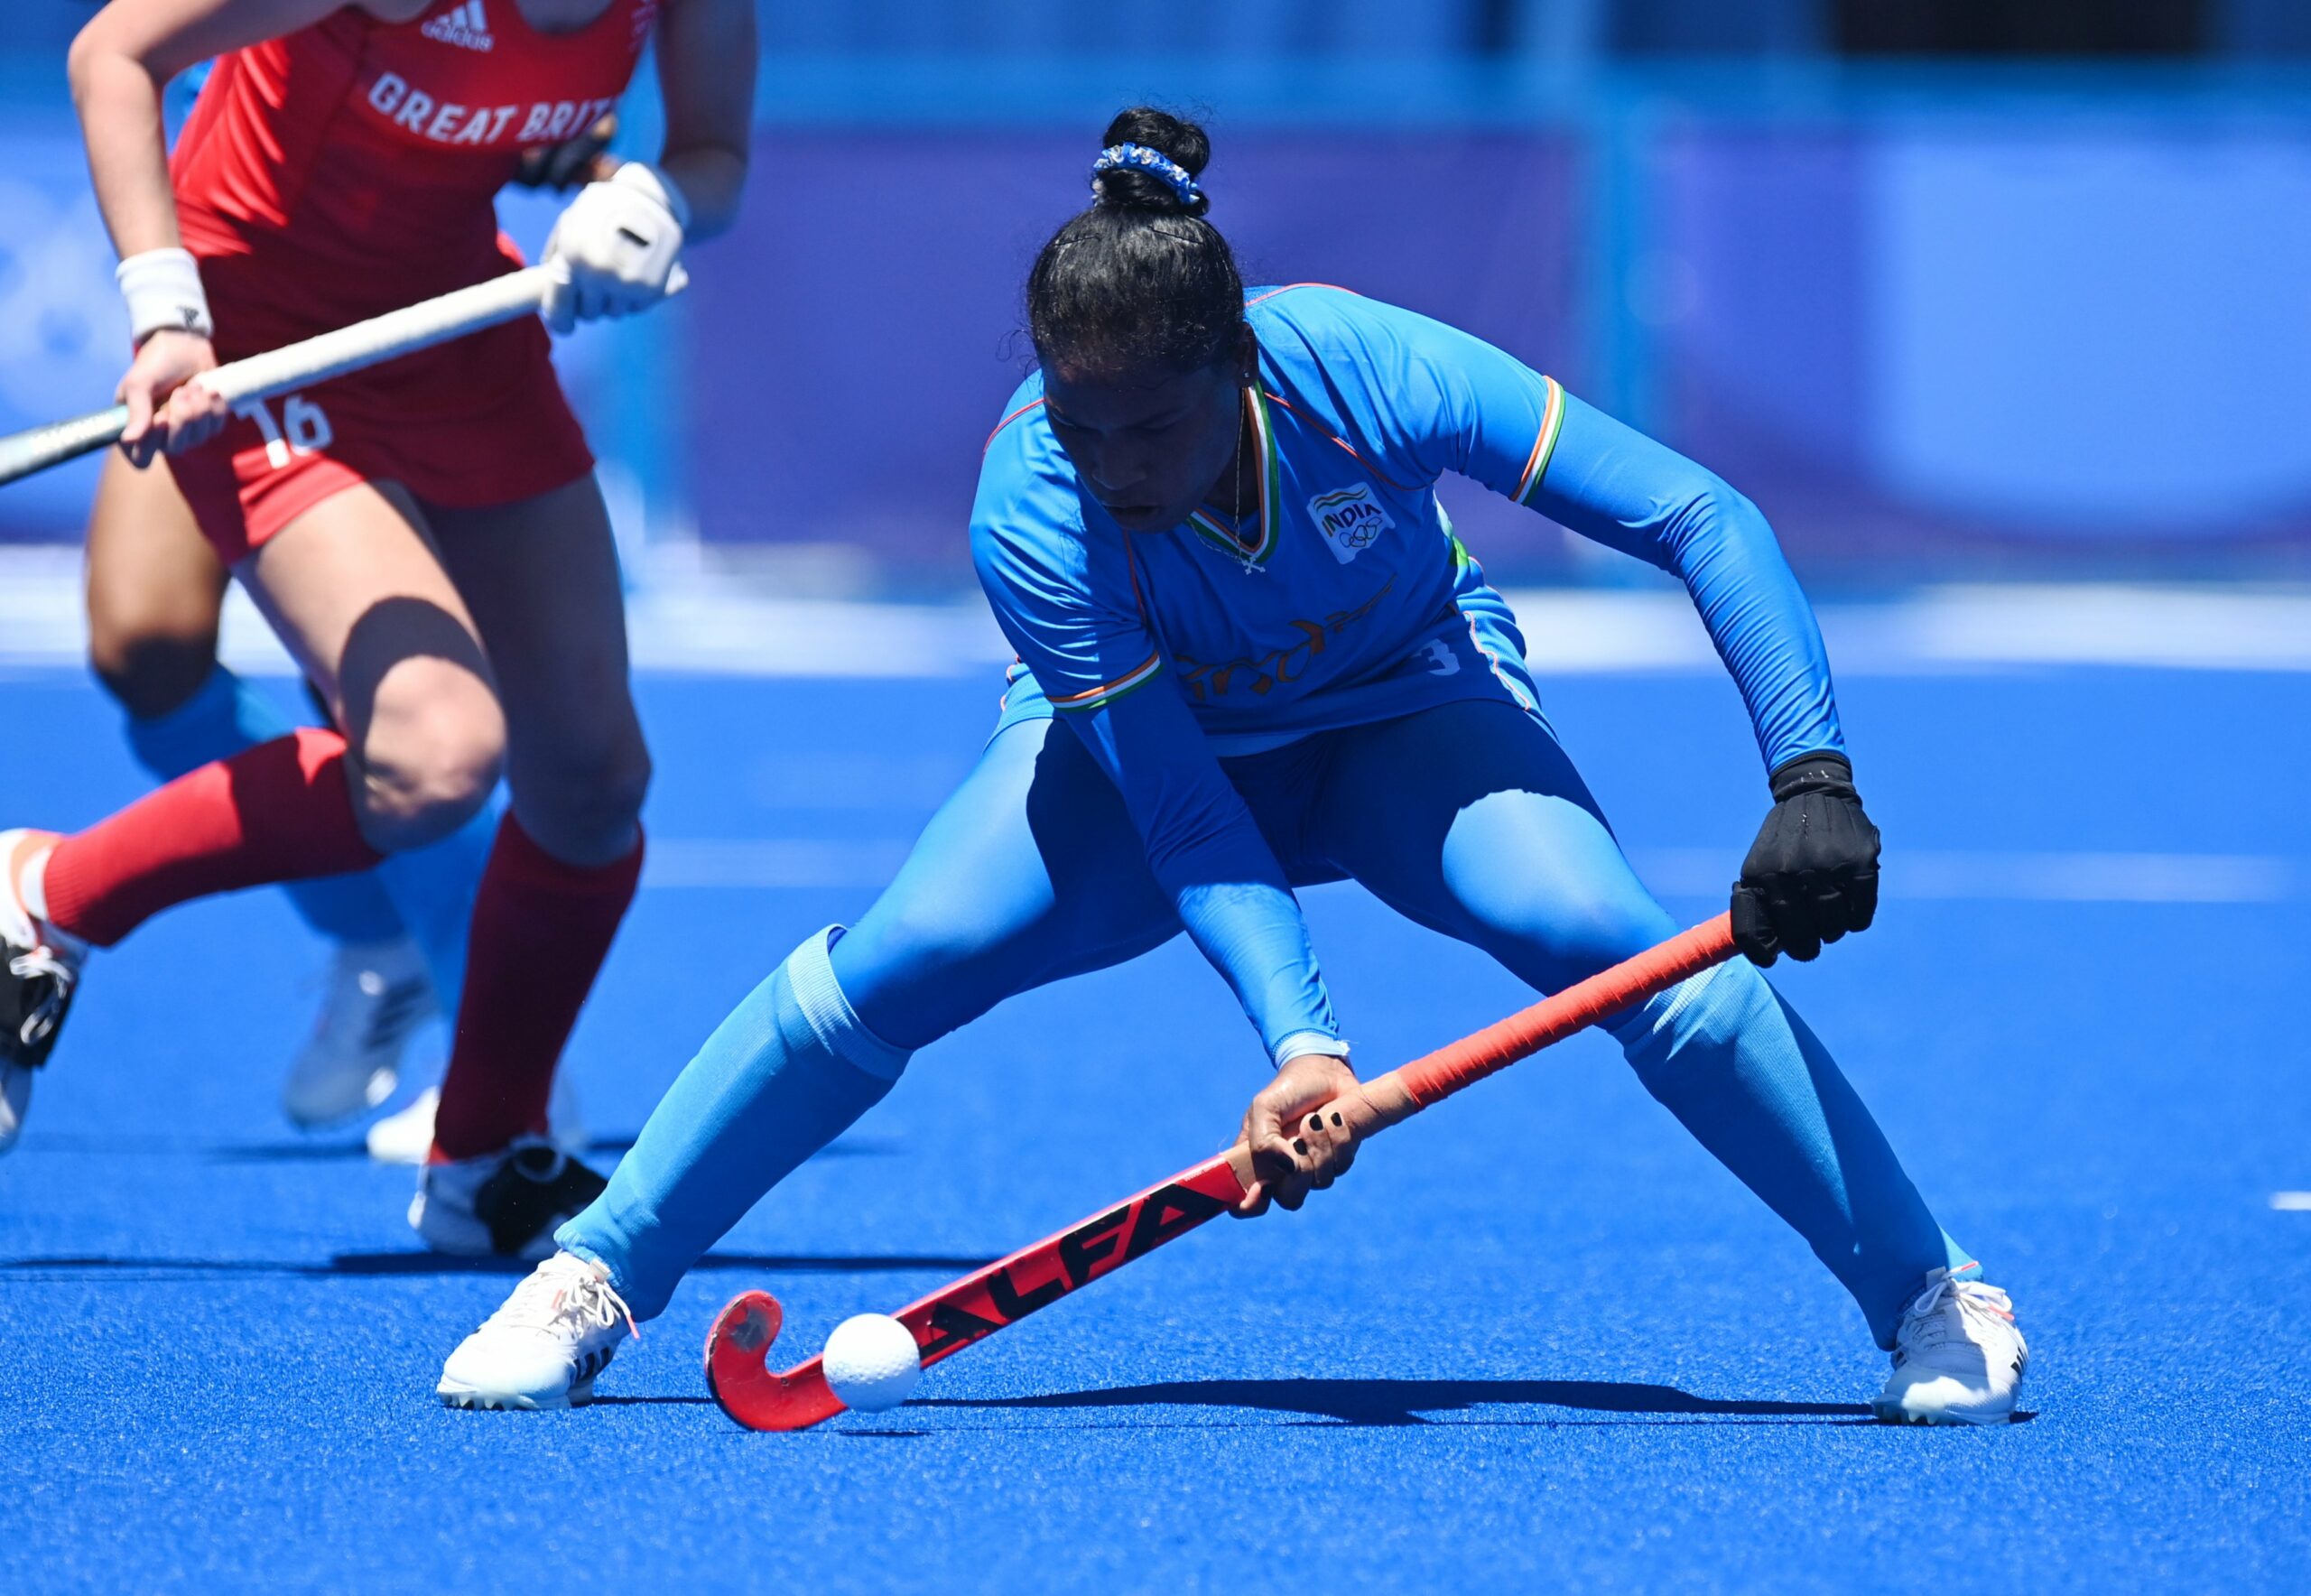 Tokyo Olympics Indian Women’s Hockey Team Prime Minister Narendra Modi Phone Call